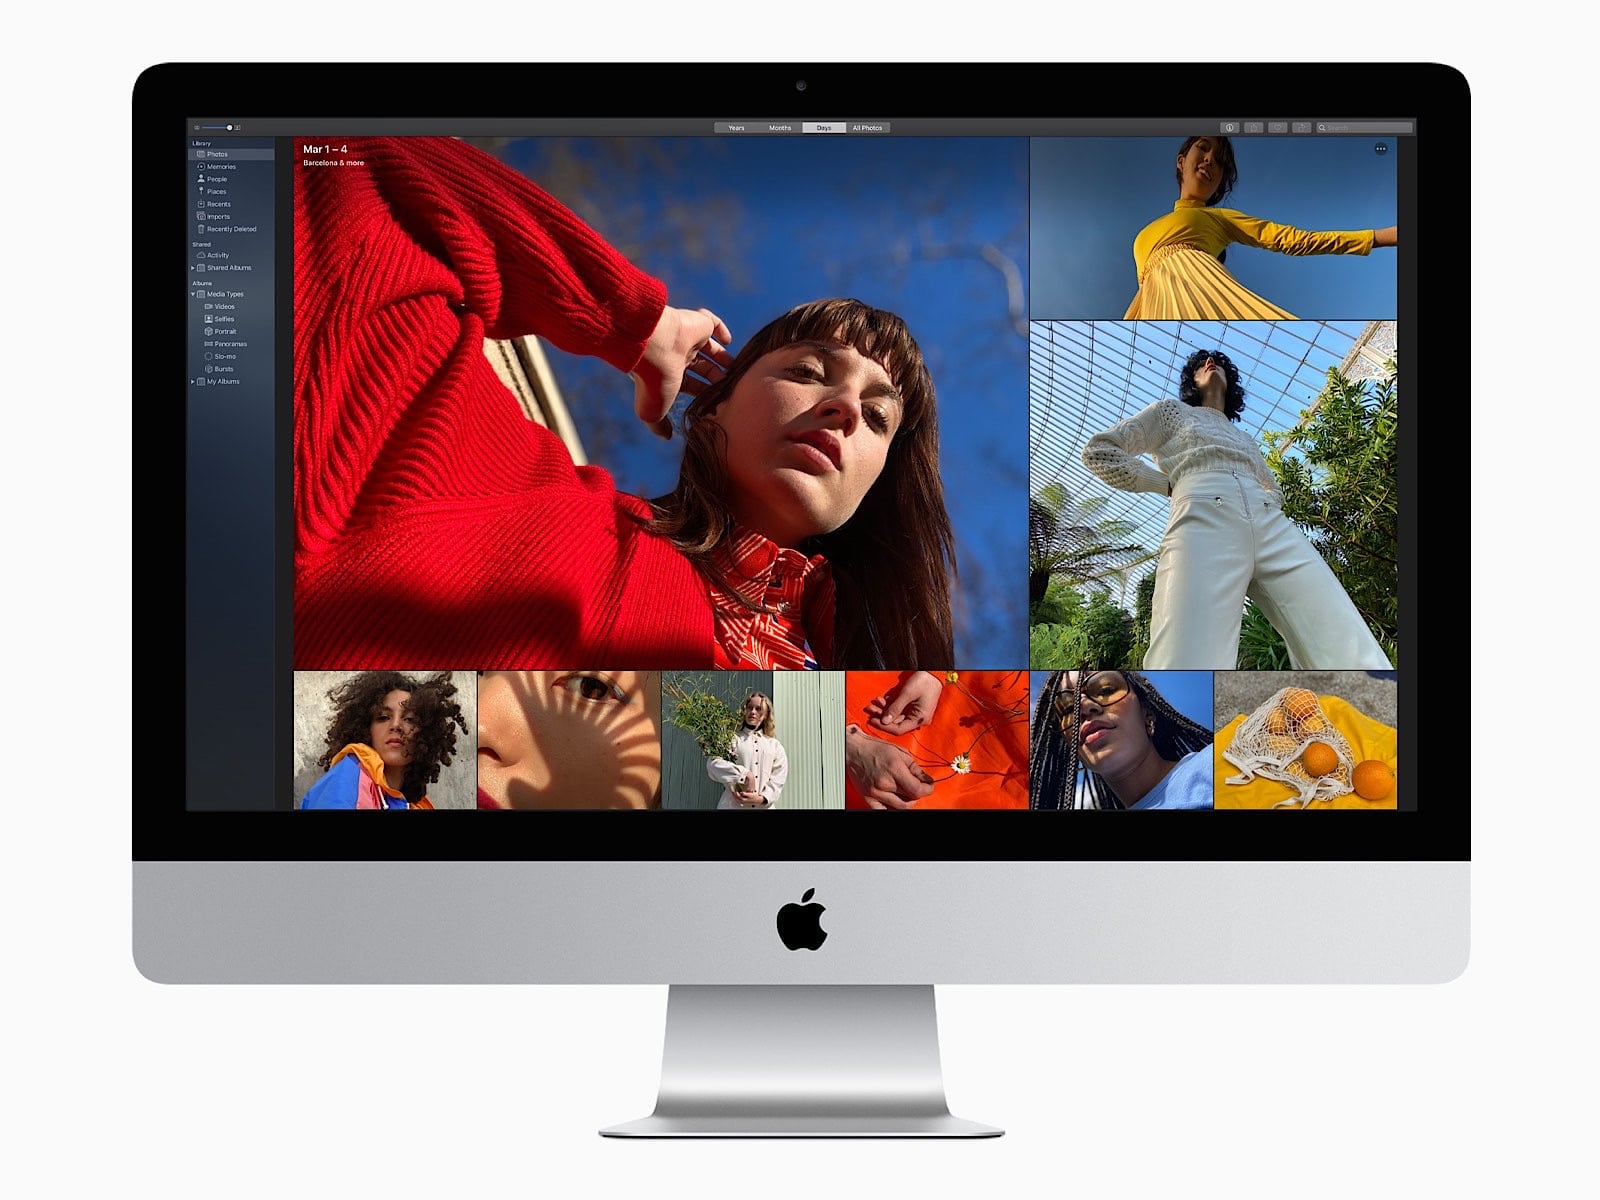 Apple iMac 2020 refresh